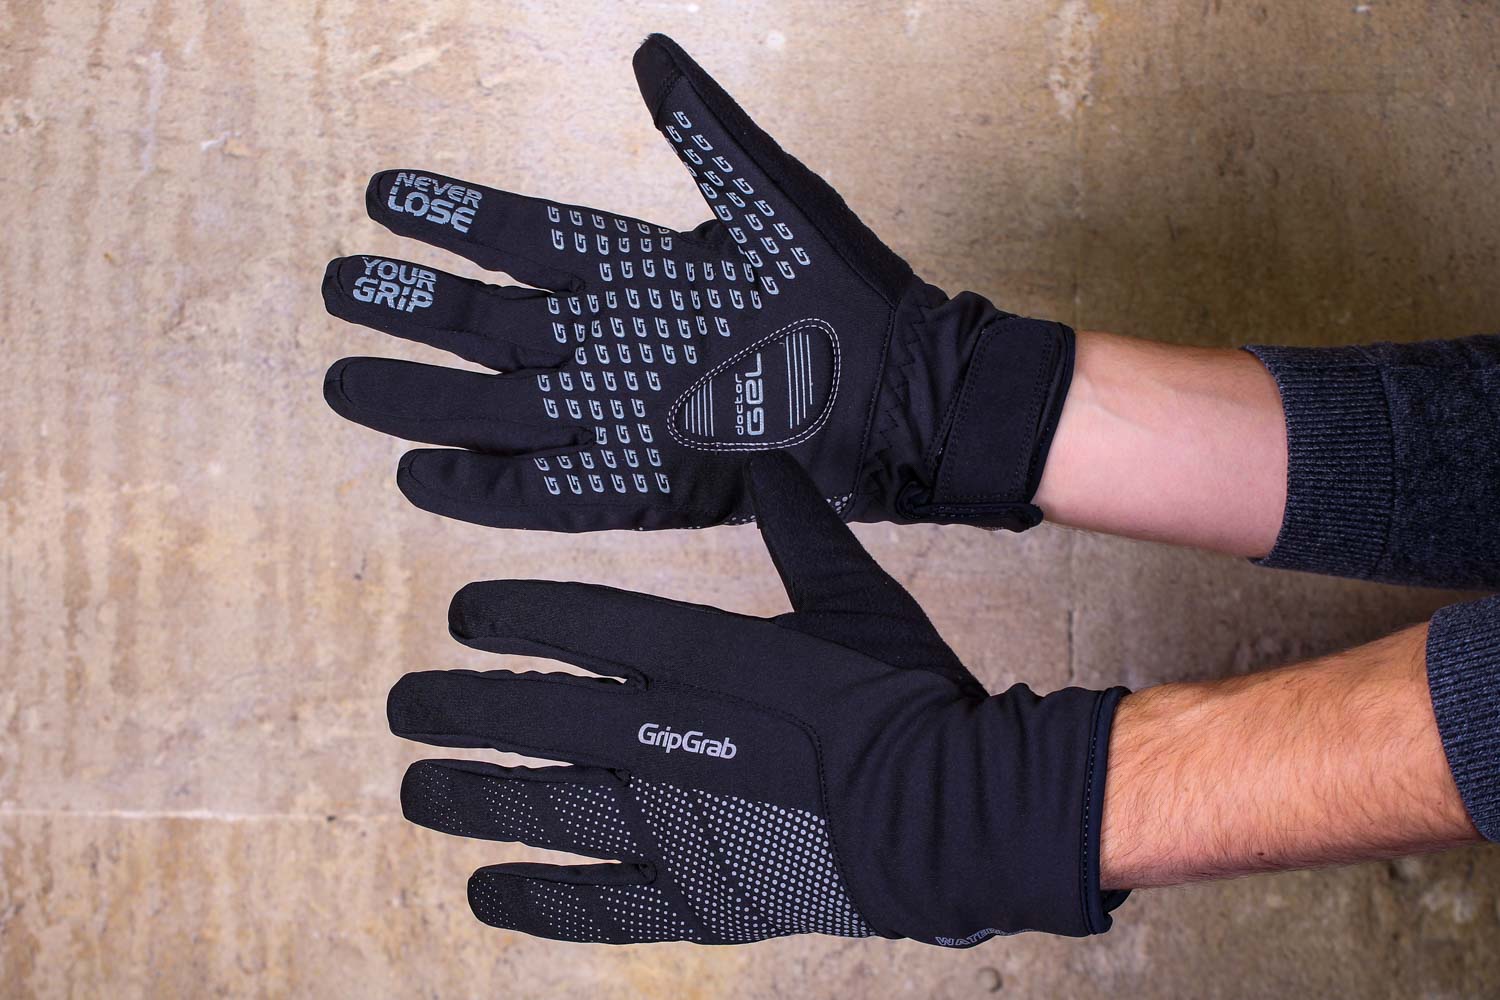 gripgrab cycling gloves